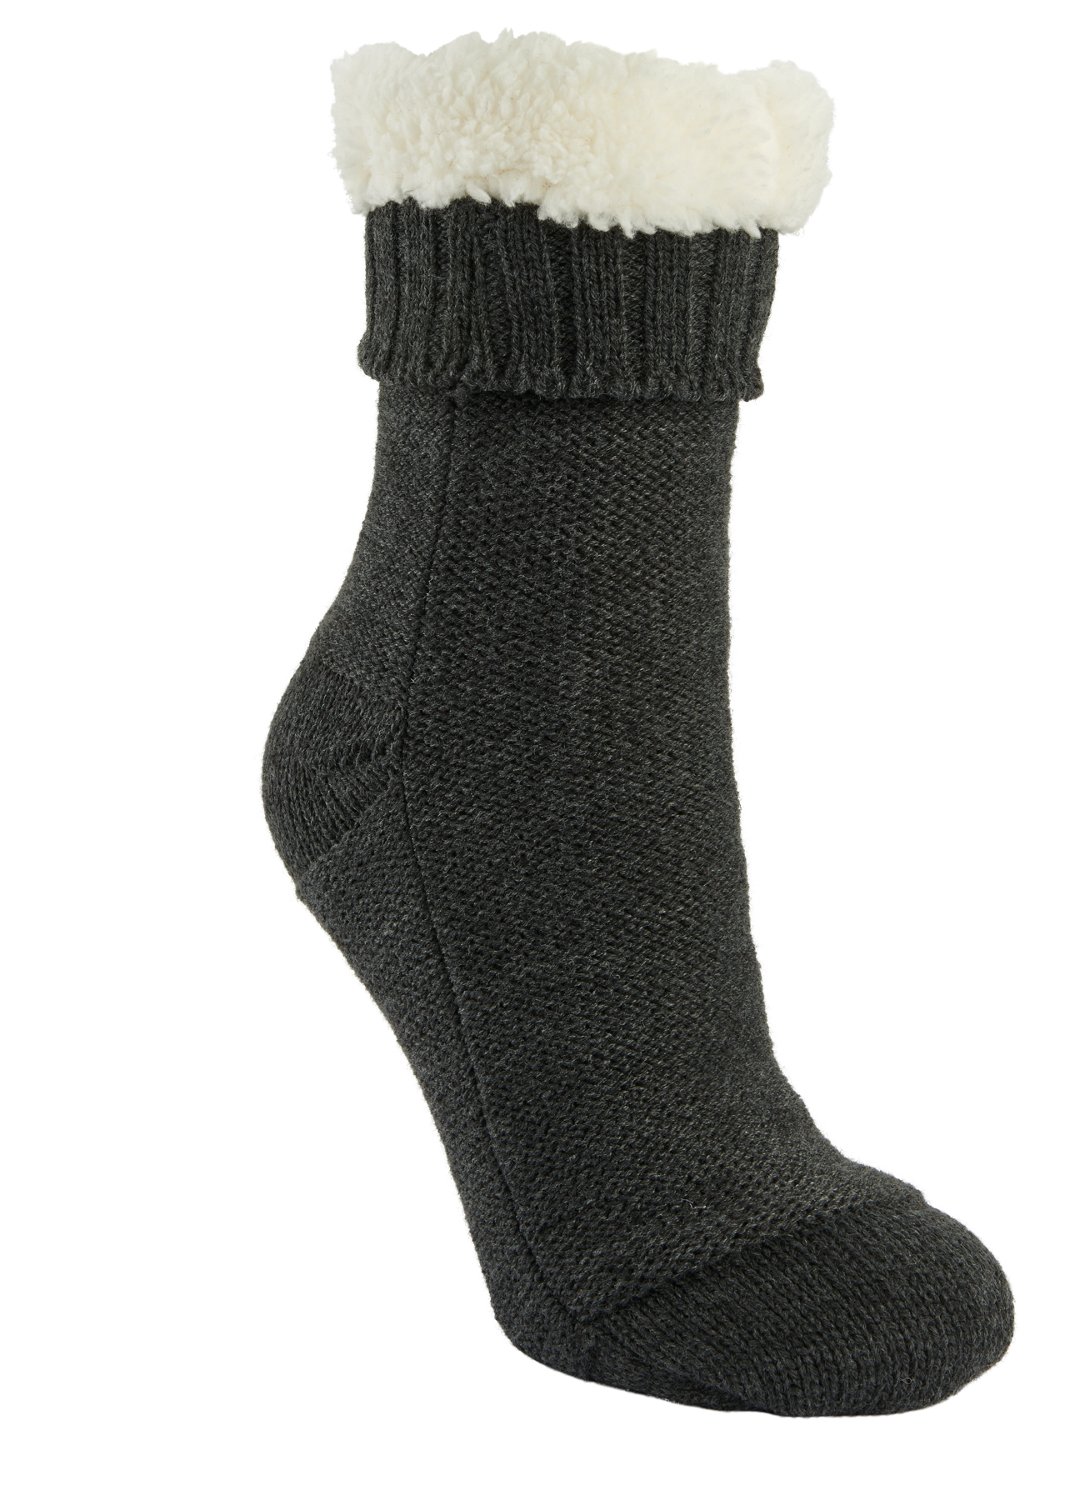 Magellan Women's Texture Knit Foldover Lodge Crew Socks | Academy